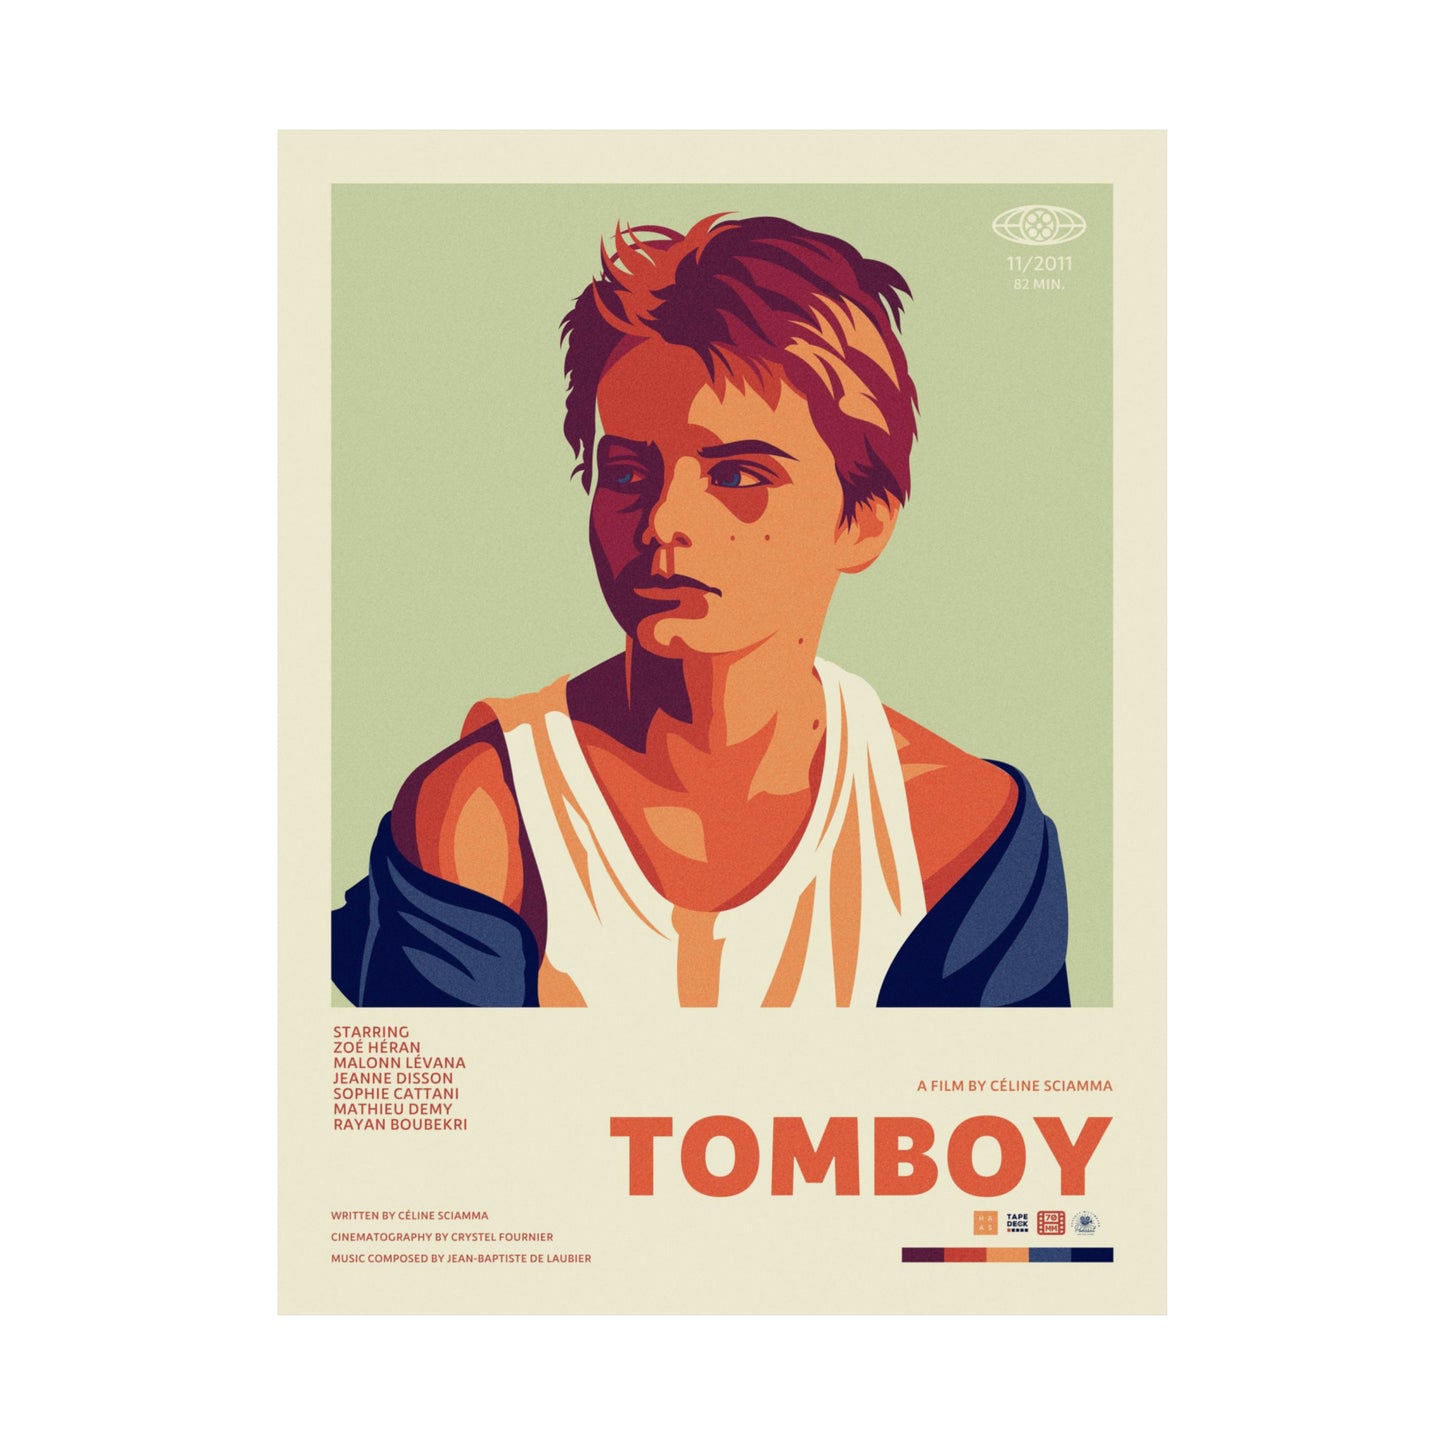 Episode 188: Tomboy